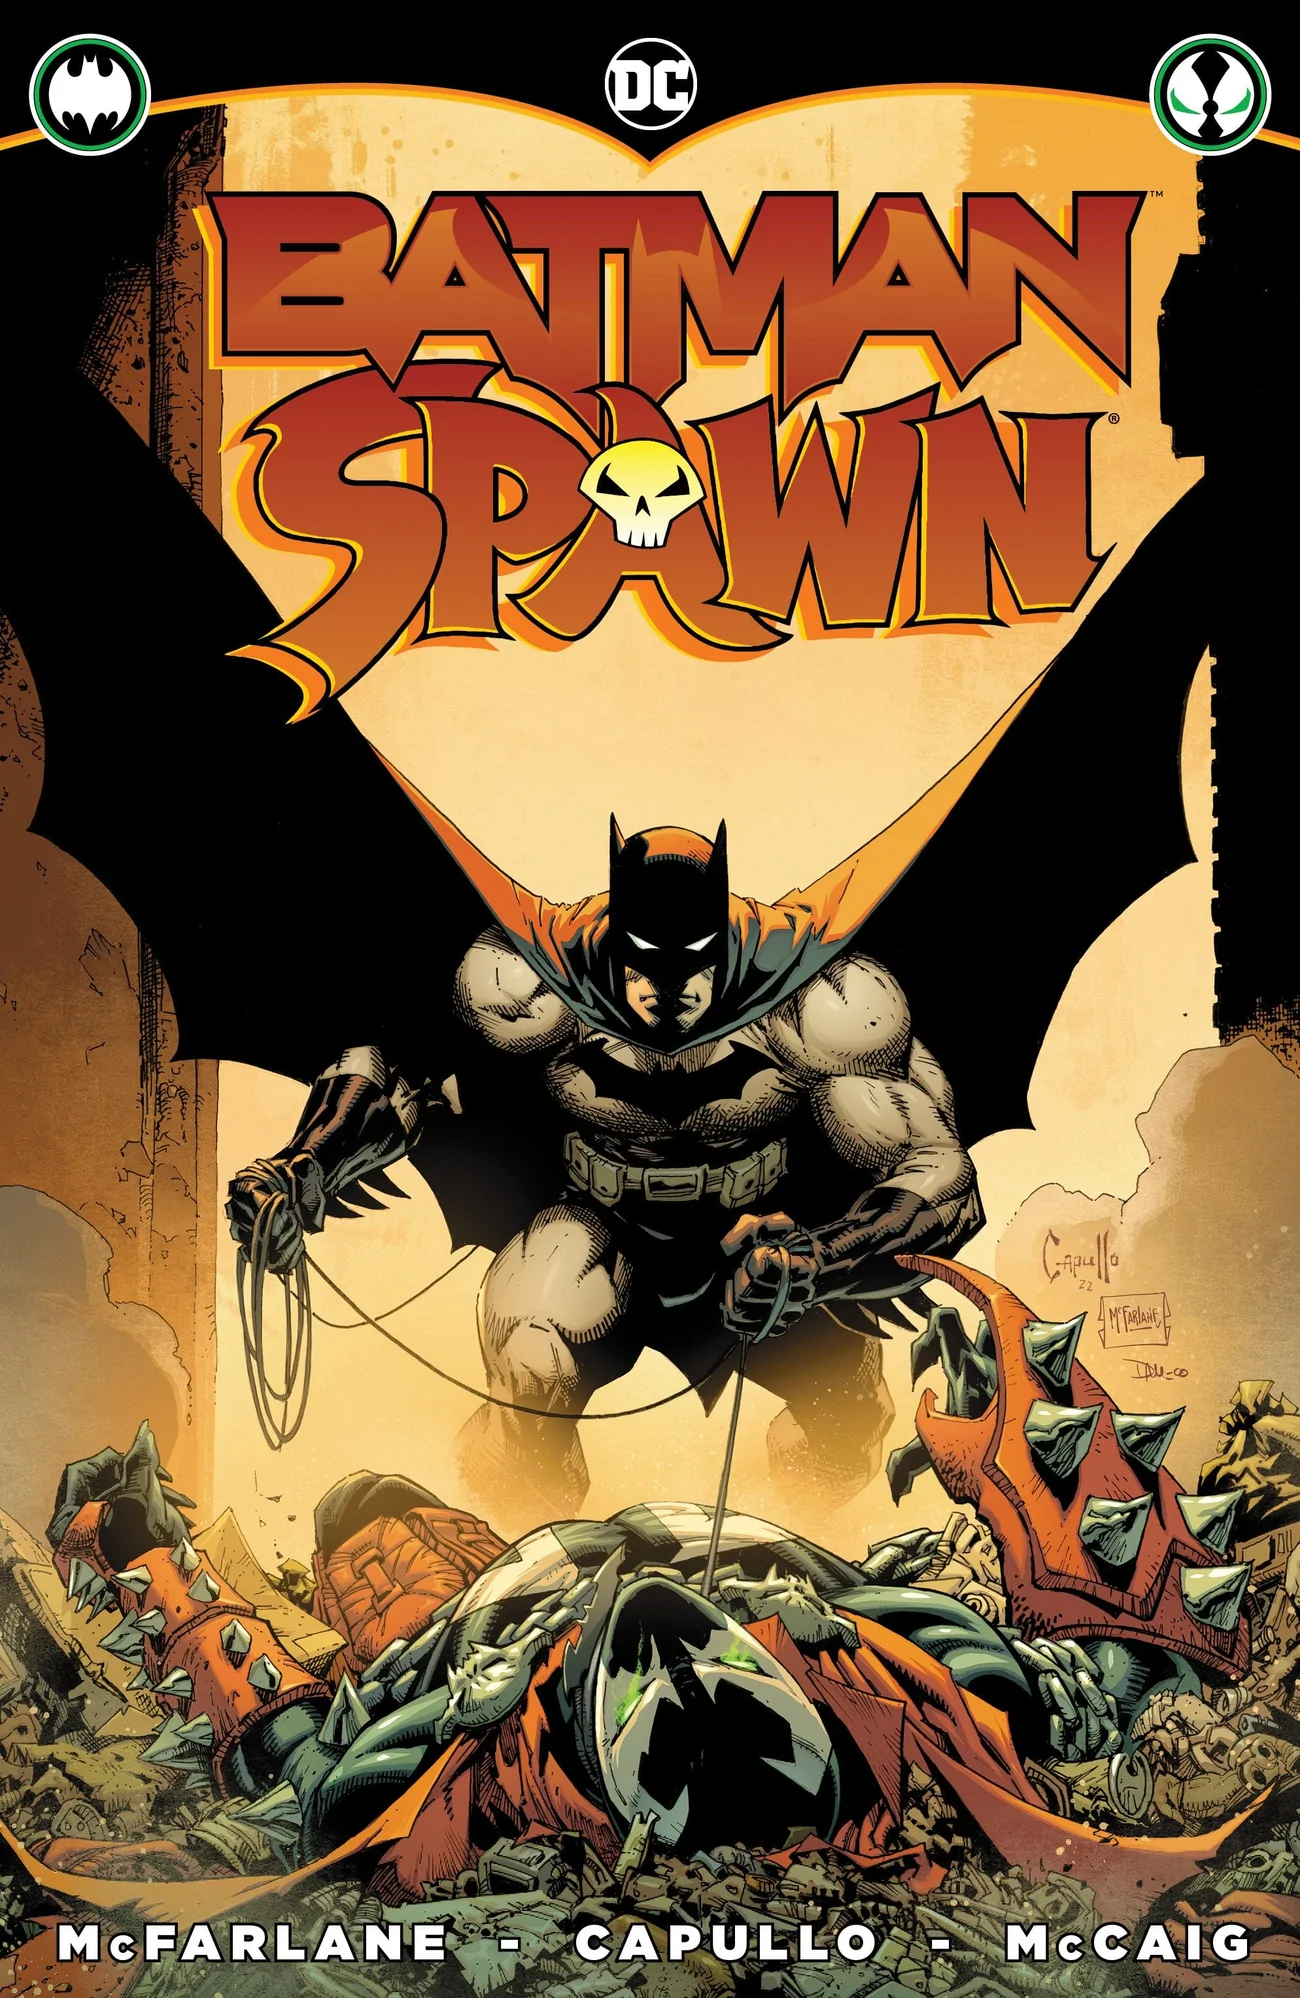 BATMAN SPAWN #1 (GREG CAPULLO A cover)